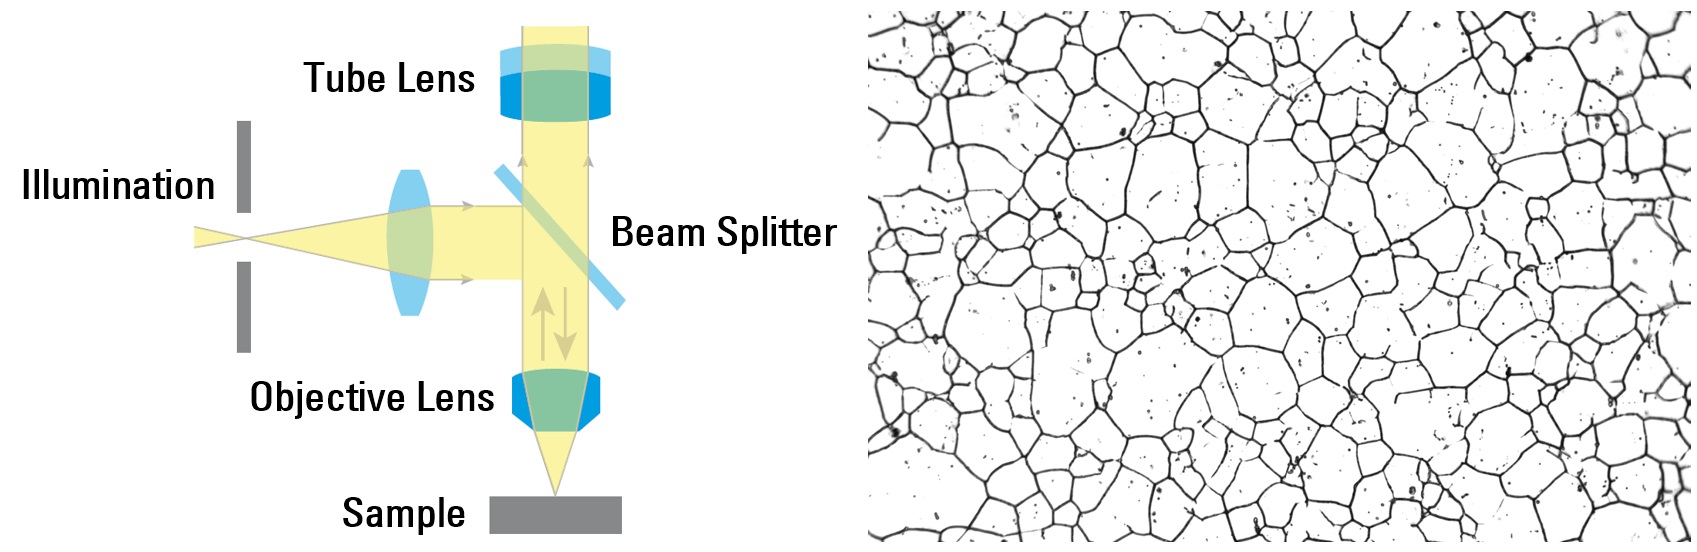 Schematic for microscope brightfield illumination and steel alloy image taken with brightfield.